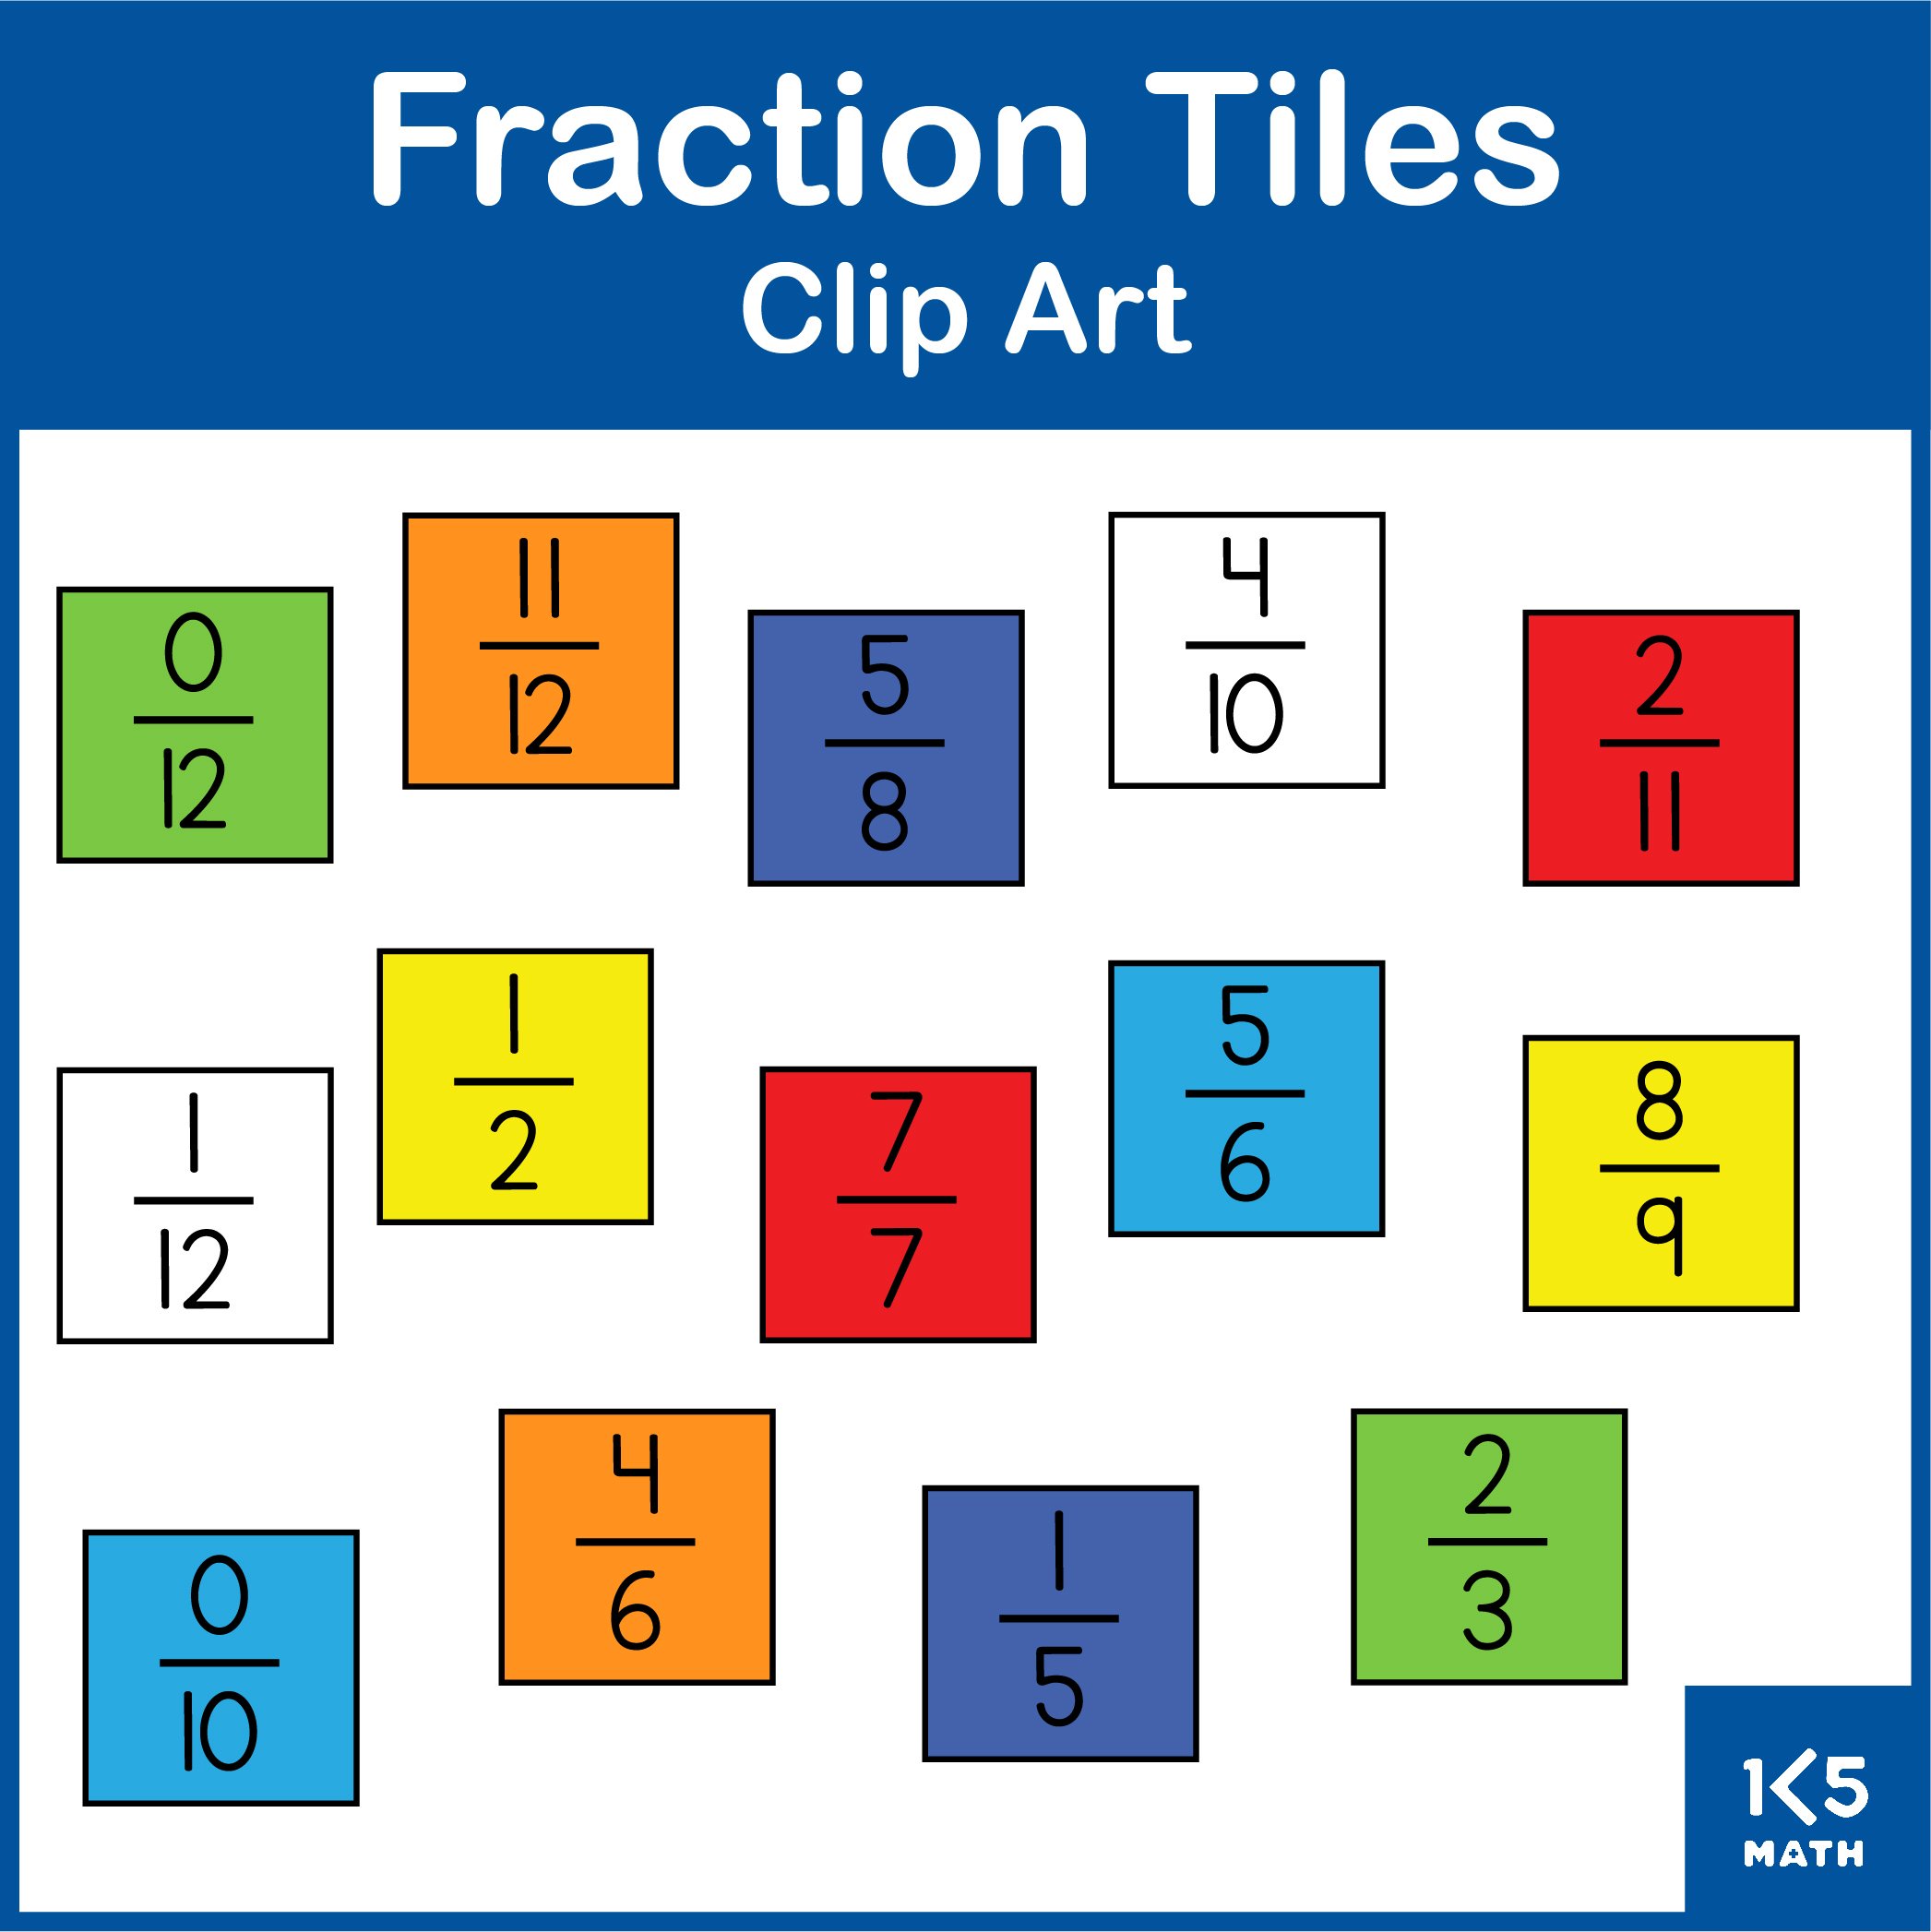 Fraction Tiles Clip Art: Set 1